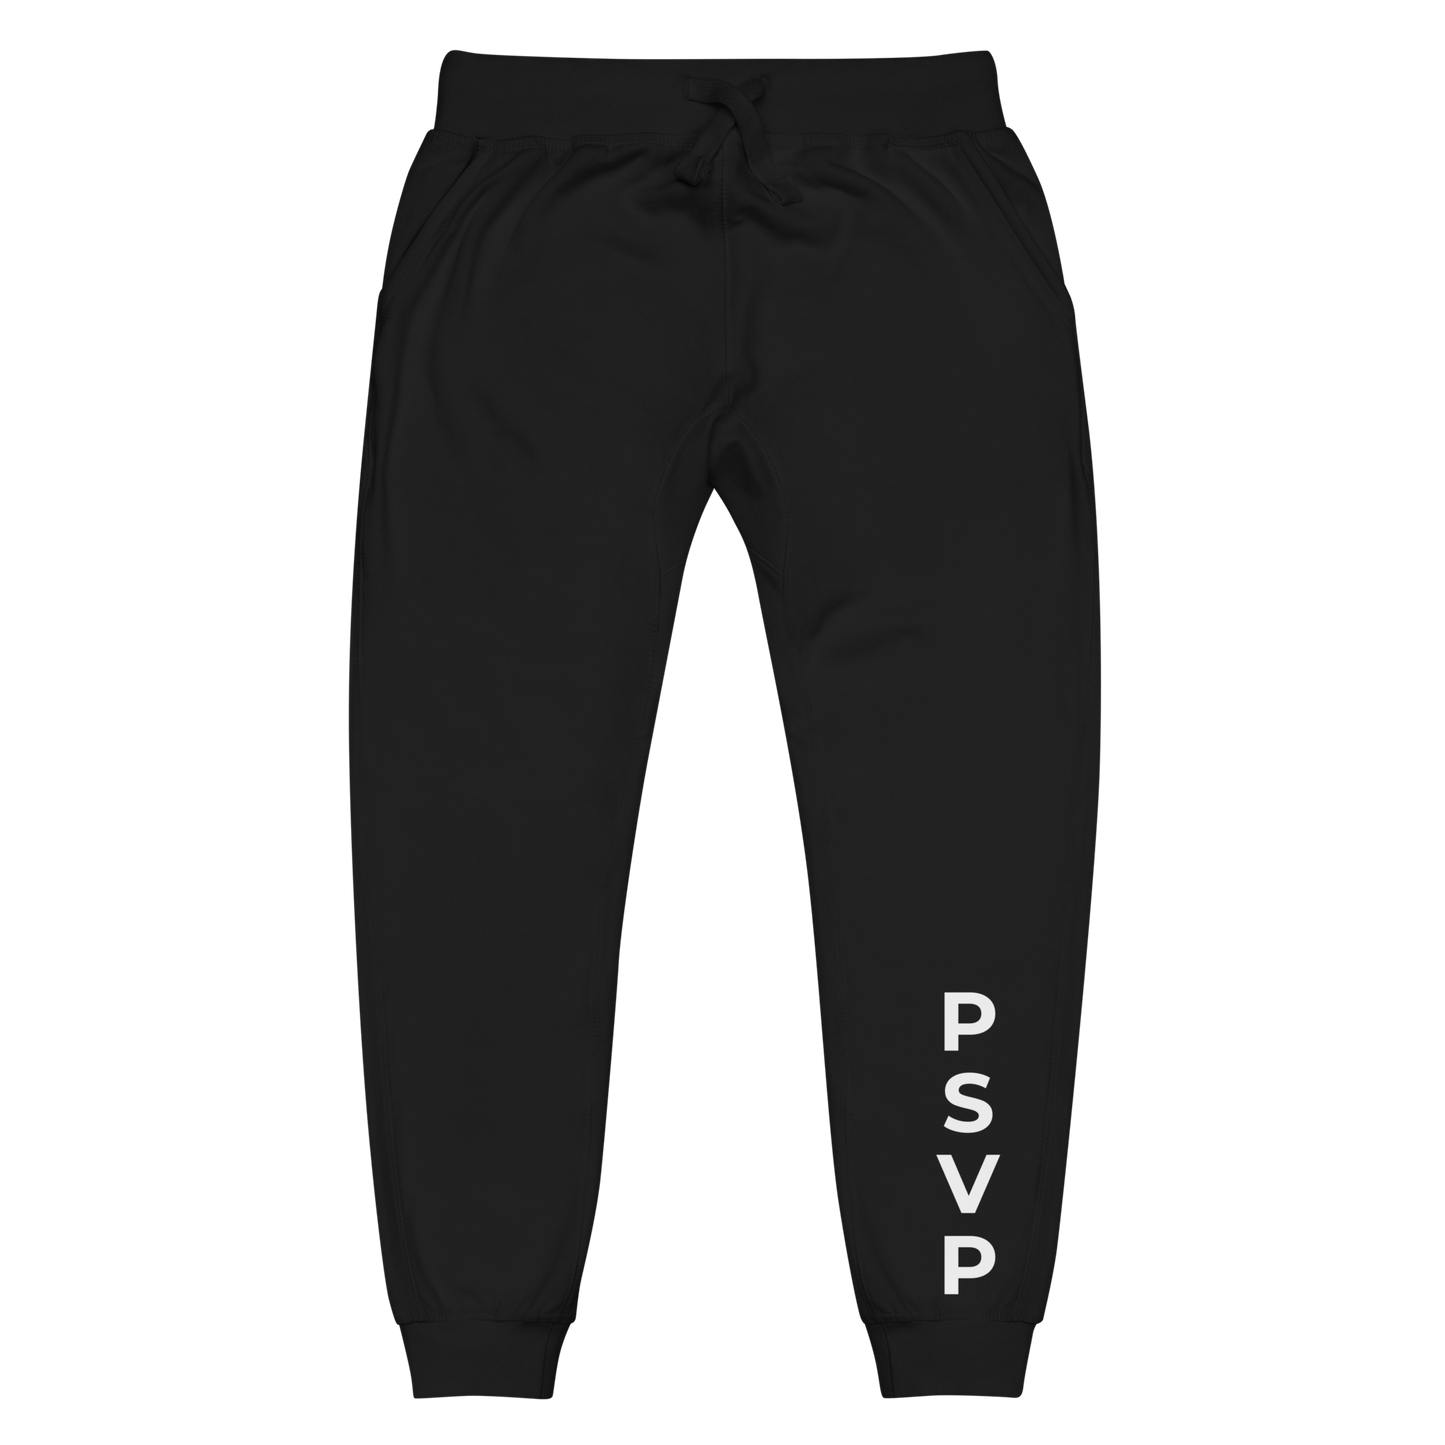 Women's Fleece Black Sweatpants - PSVP | Sweatpants | PARADIS SVP